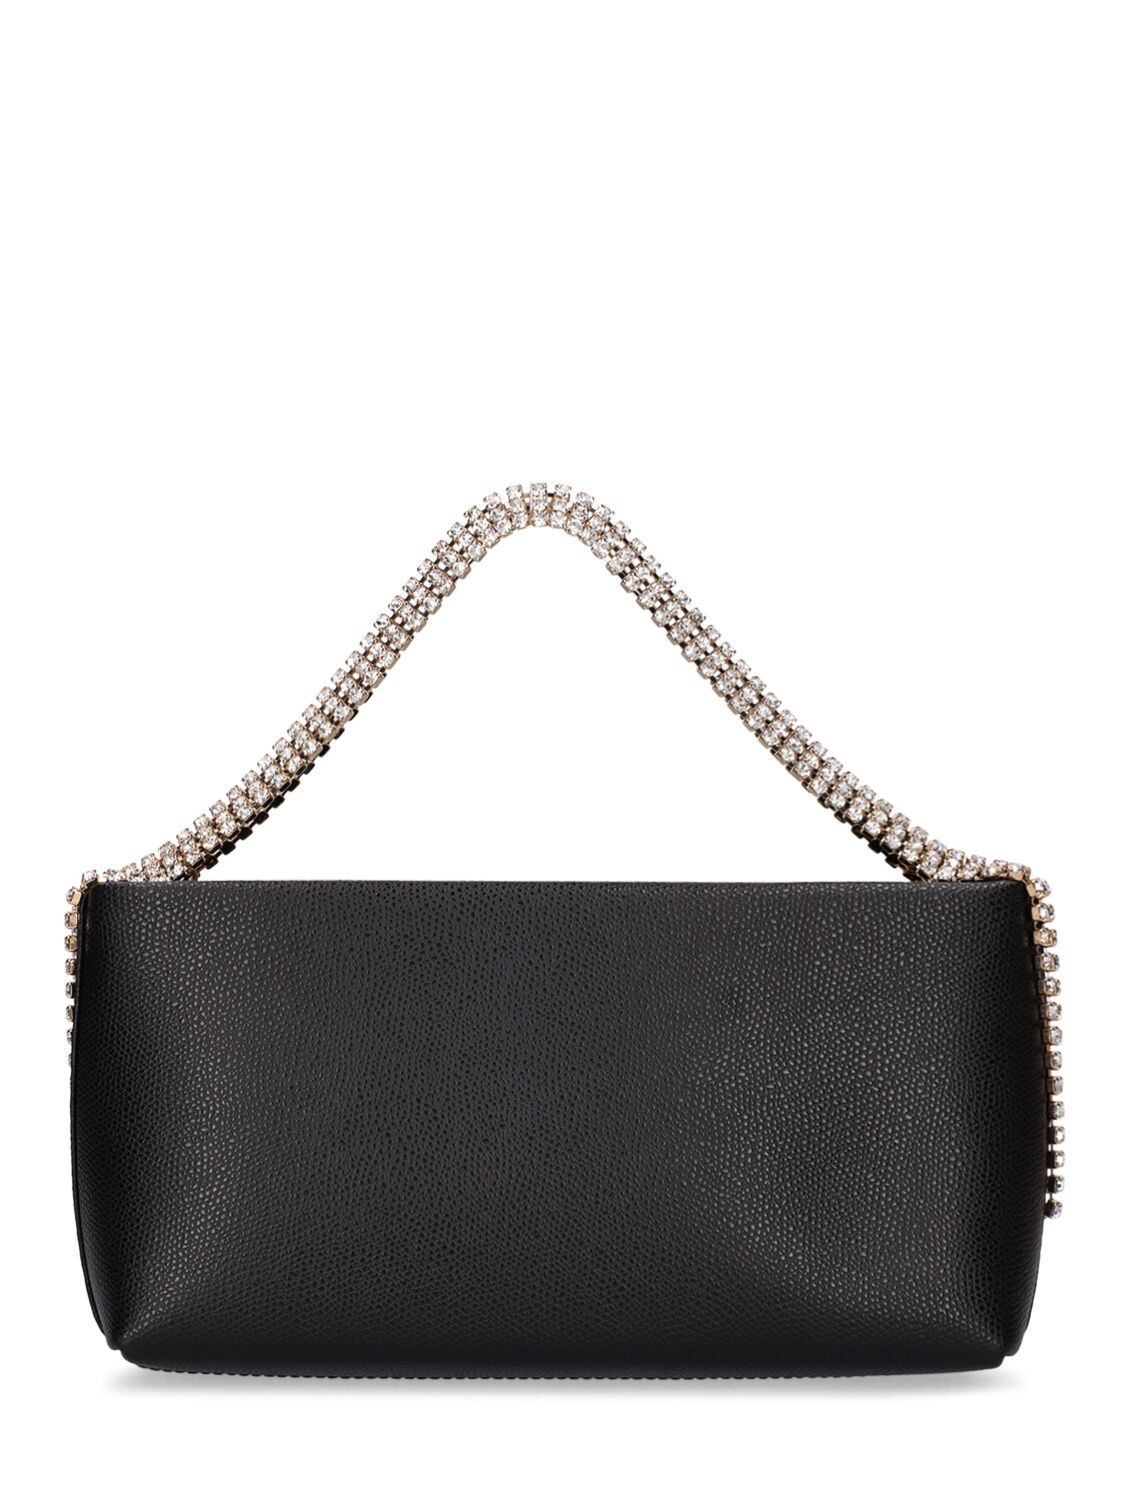 Rosantica Annabella Leather Top Handle Bag In Black